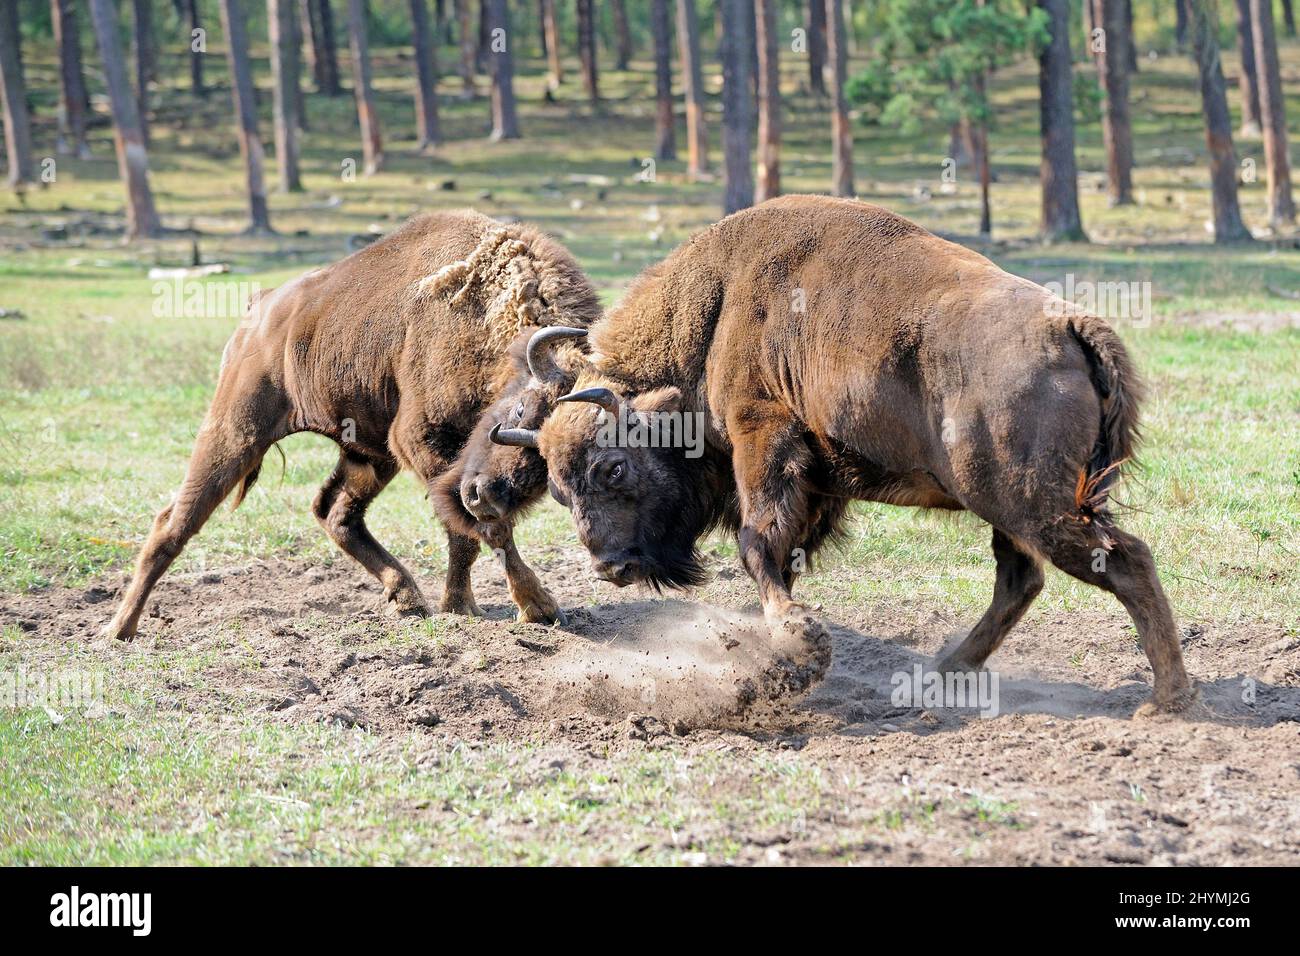 European bison, wisent (Bison bonasus), two European bisons fighting, Germany Stock Photo